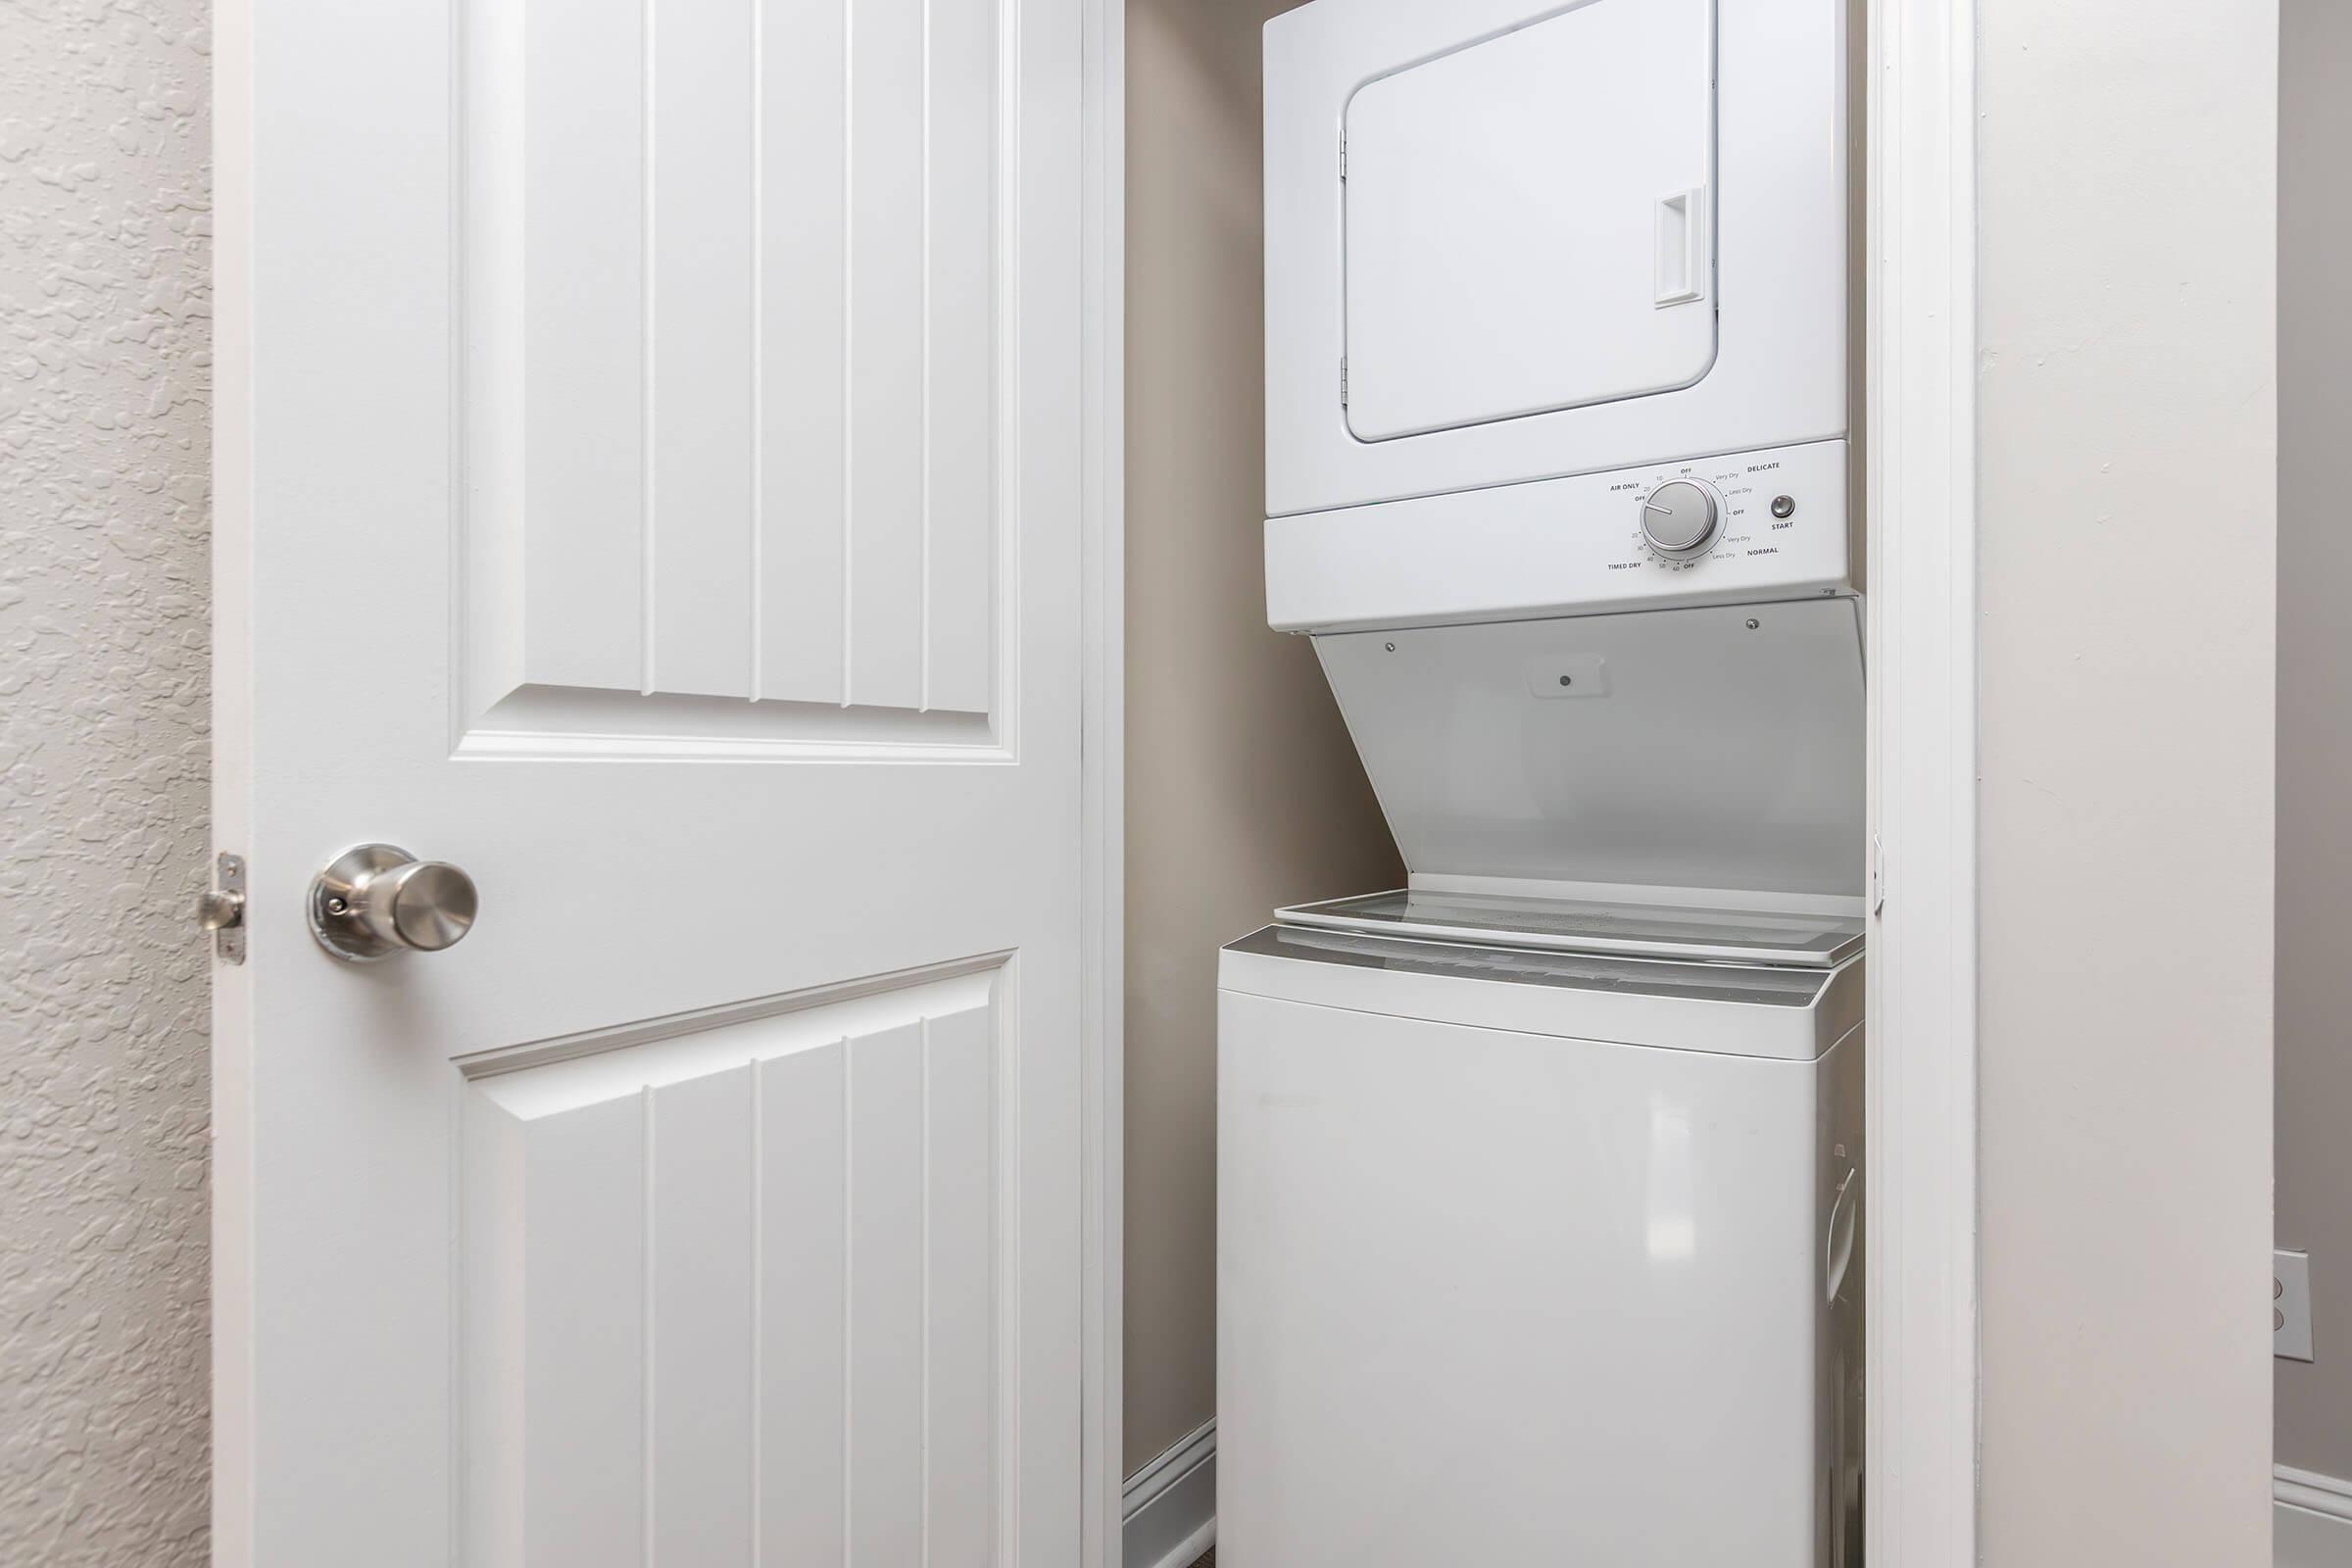 a refrigerator freezer sitting next to a door